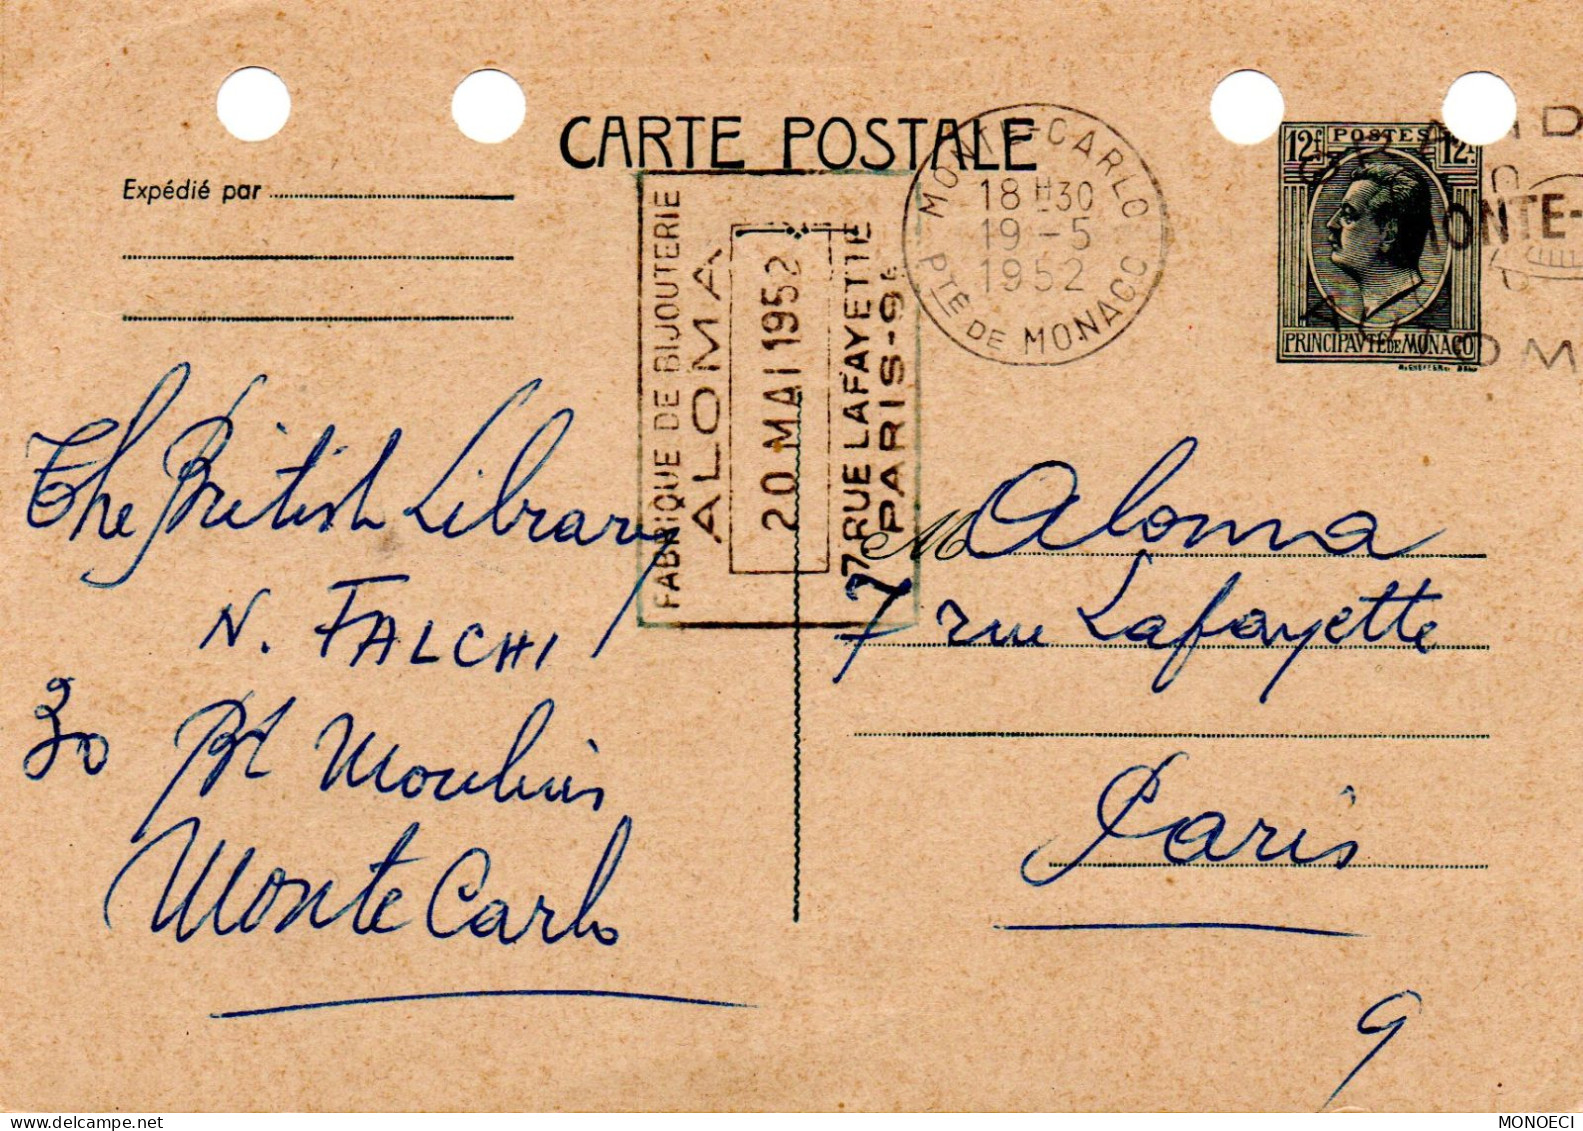 MONACO -- MONTE CARLO -- Entier Postal -- Carte Postale -- Prince Louis II -- 12 Francs Gris Vert Sur Chamois  (1949) - Interi Postali